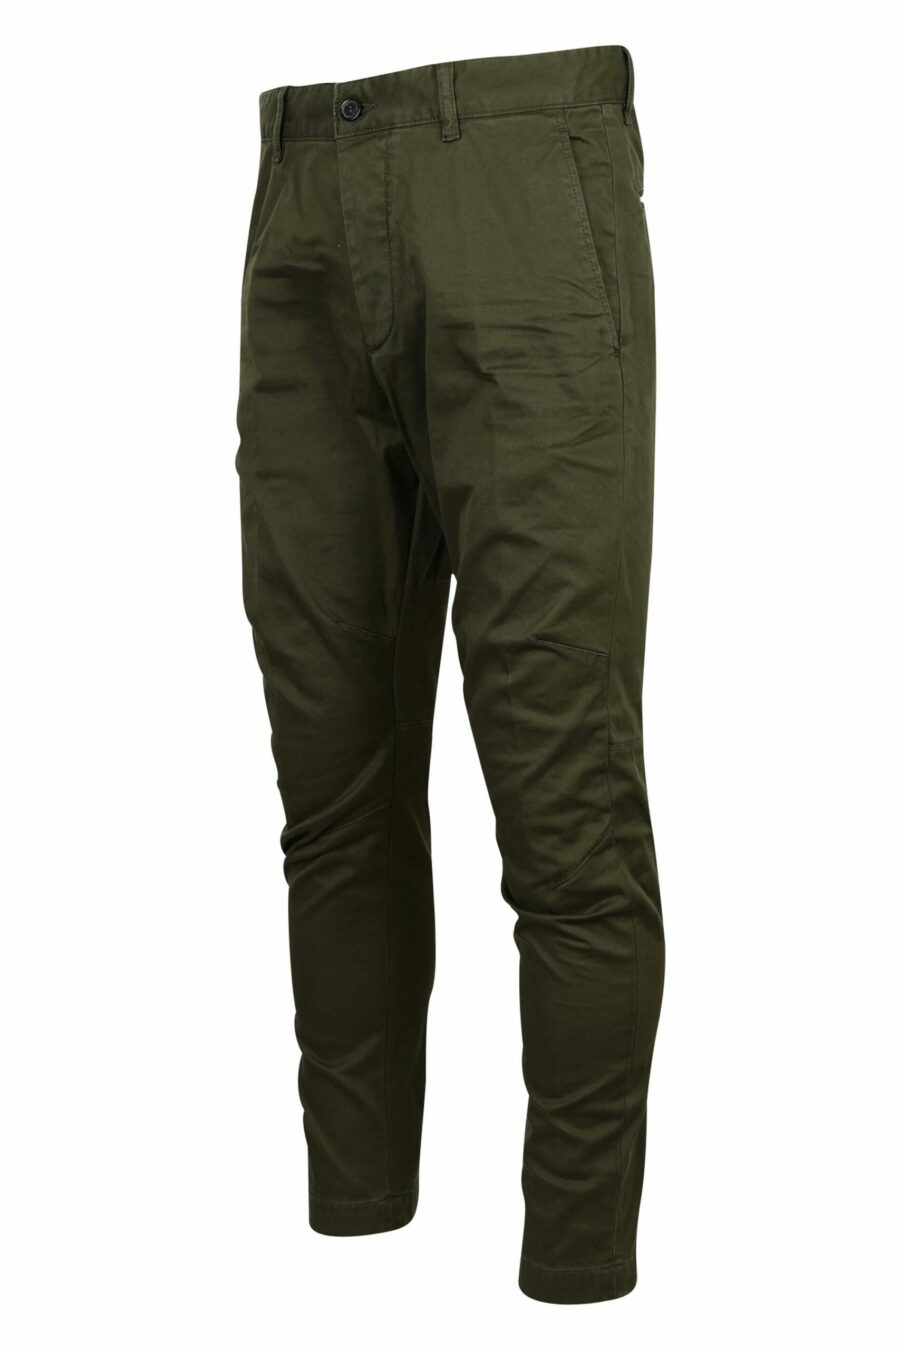 Pantalon "sexy chino" vert militaire - 8054148321741 1 échelle